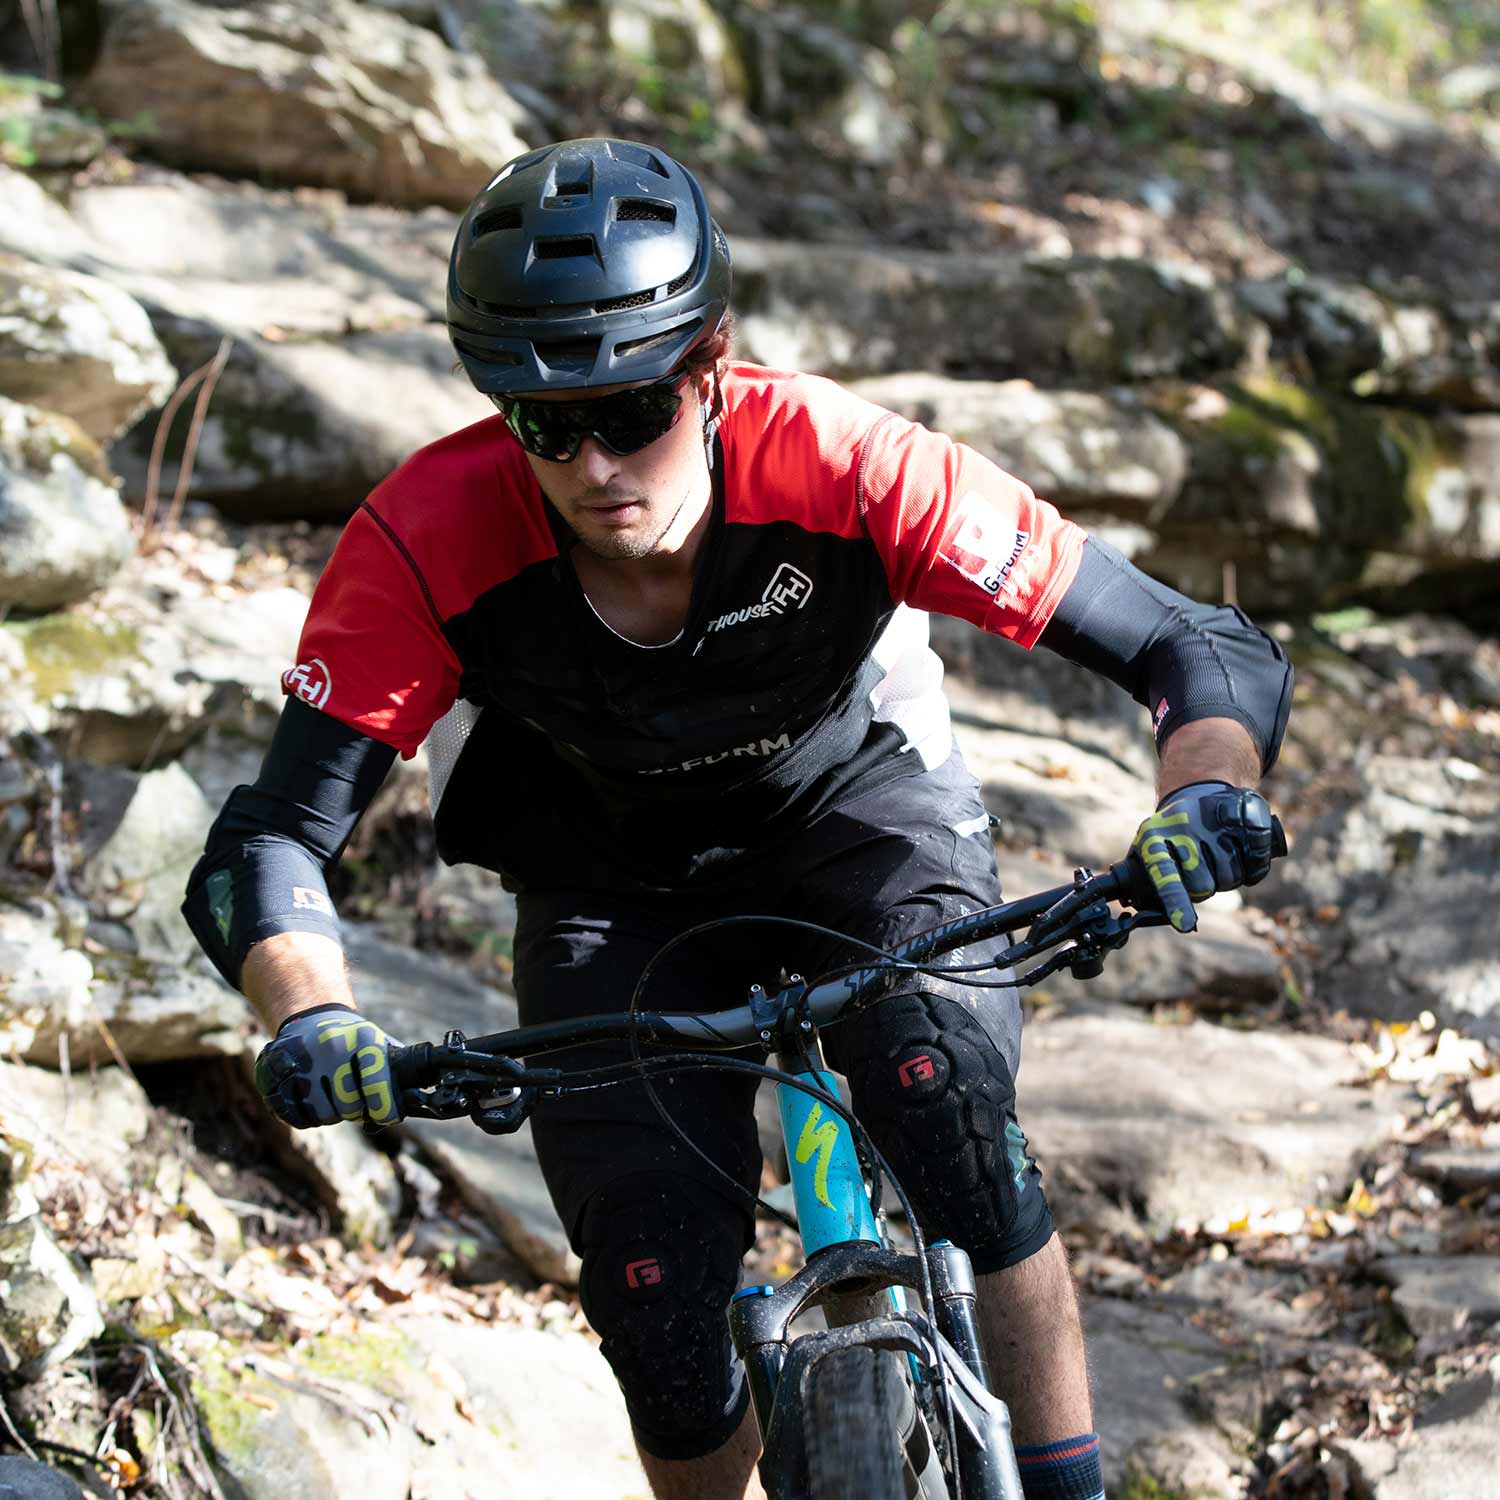 Best elbow pads for mountain biking: Lightweight to heavy duty